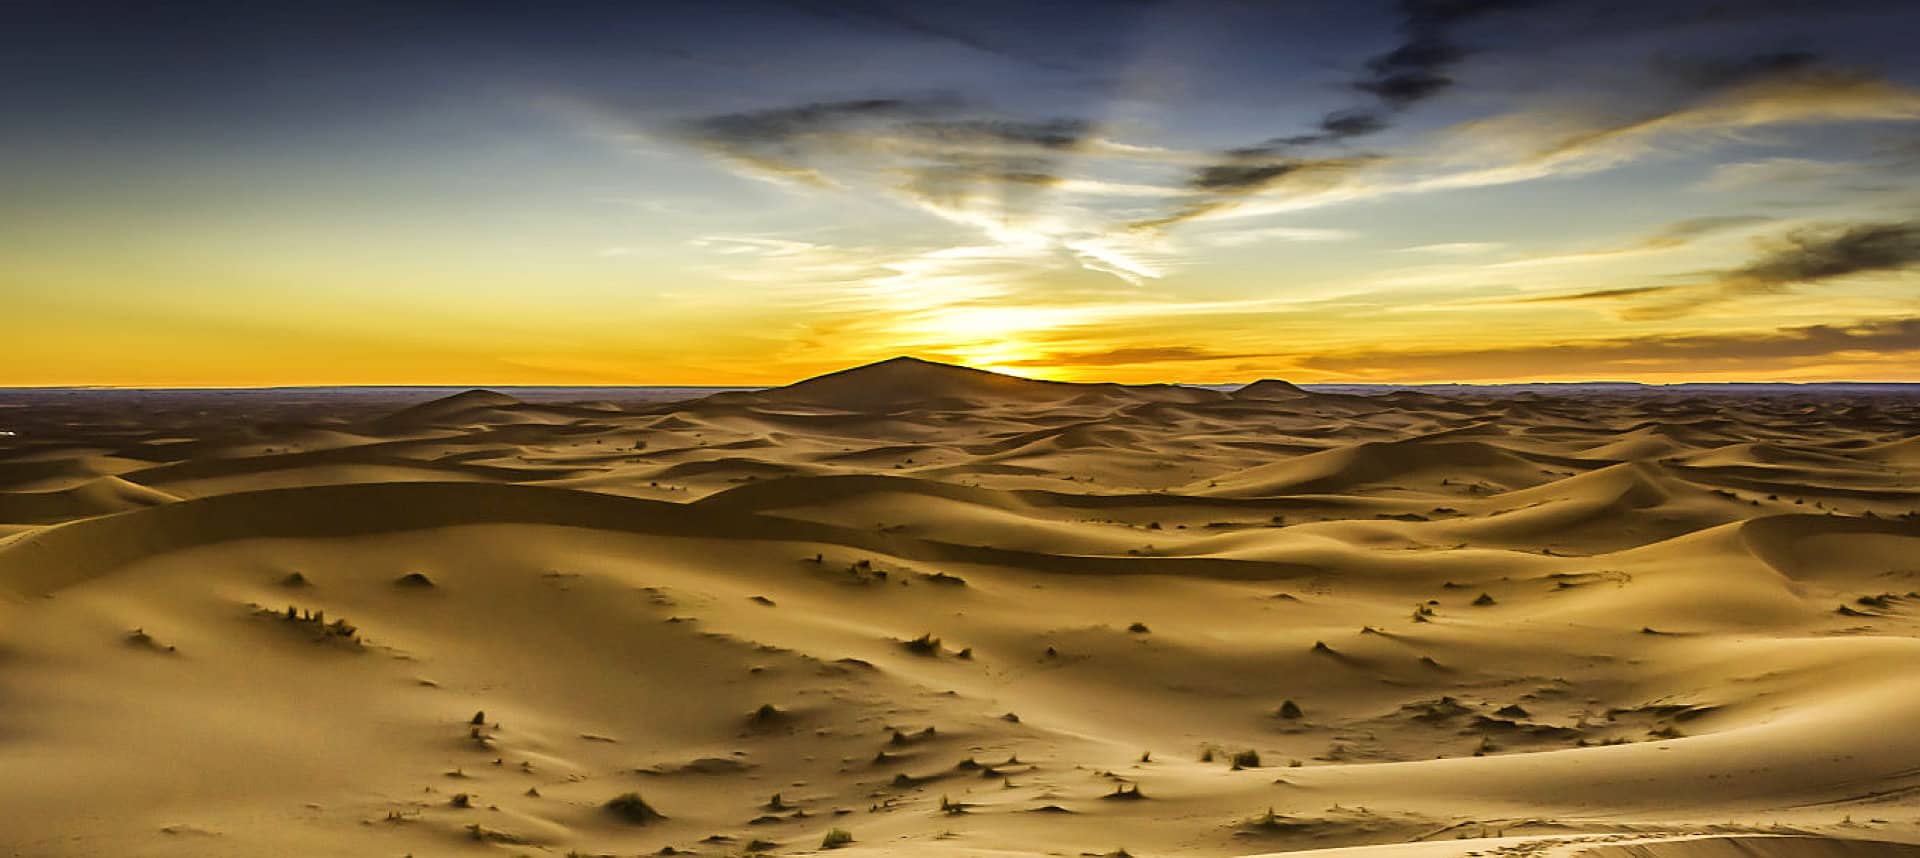 portrait of a beautiful desert view